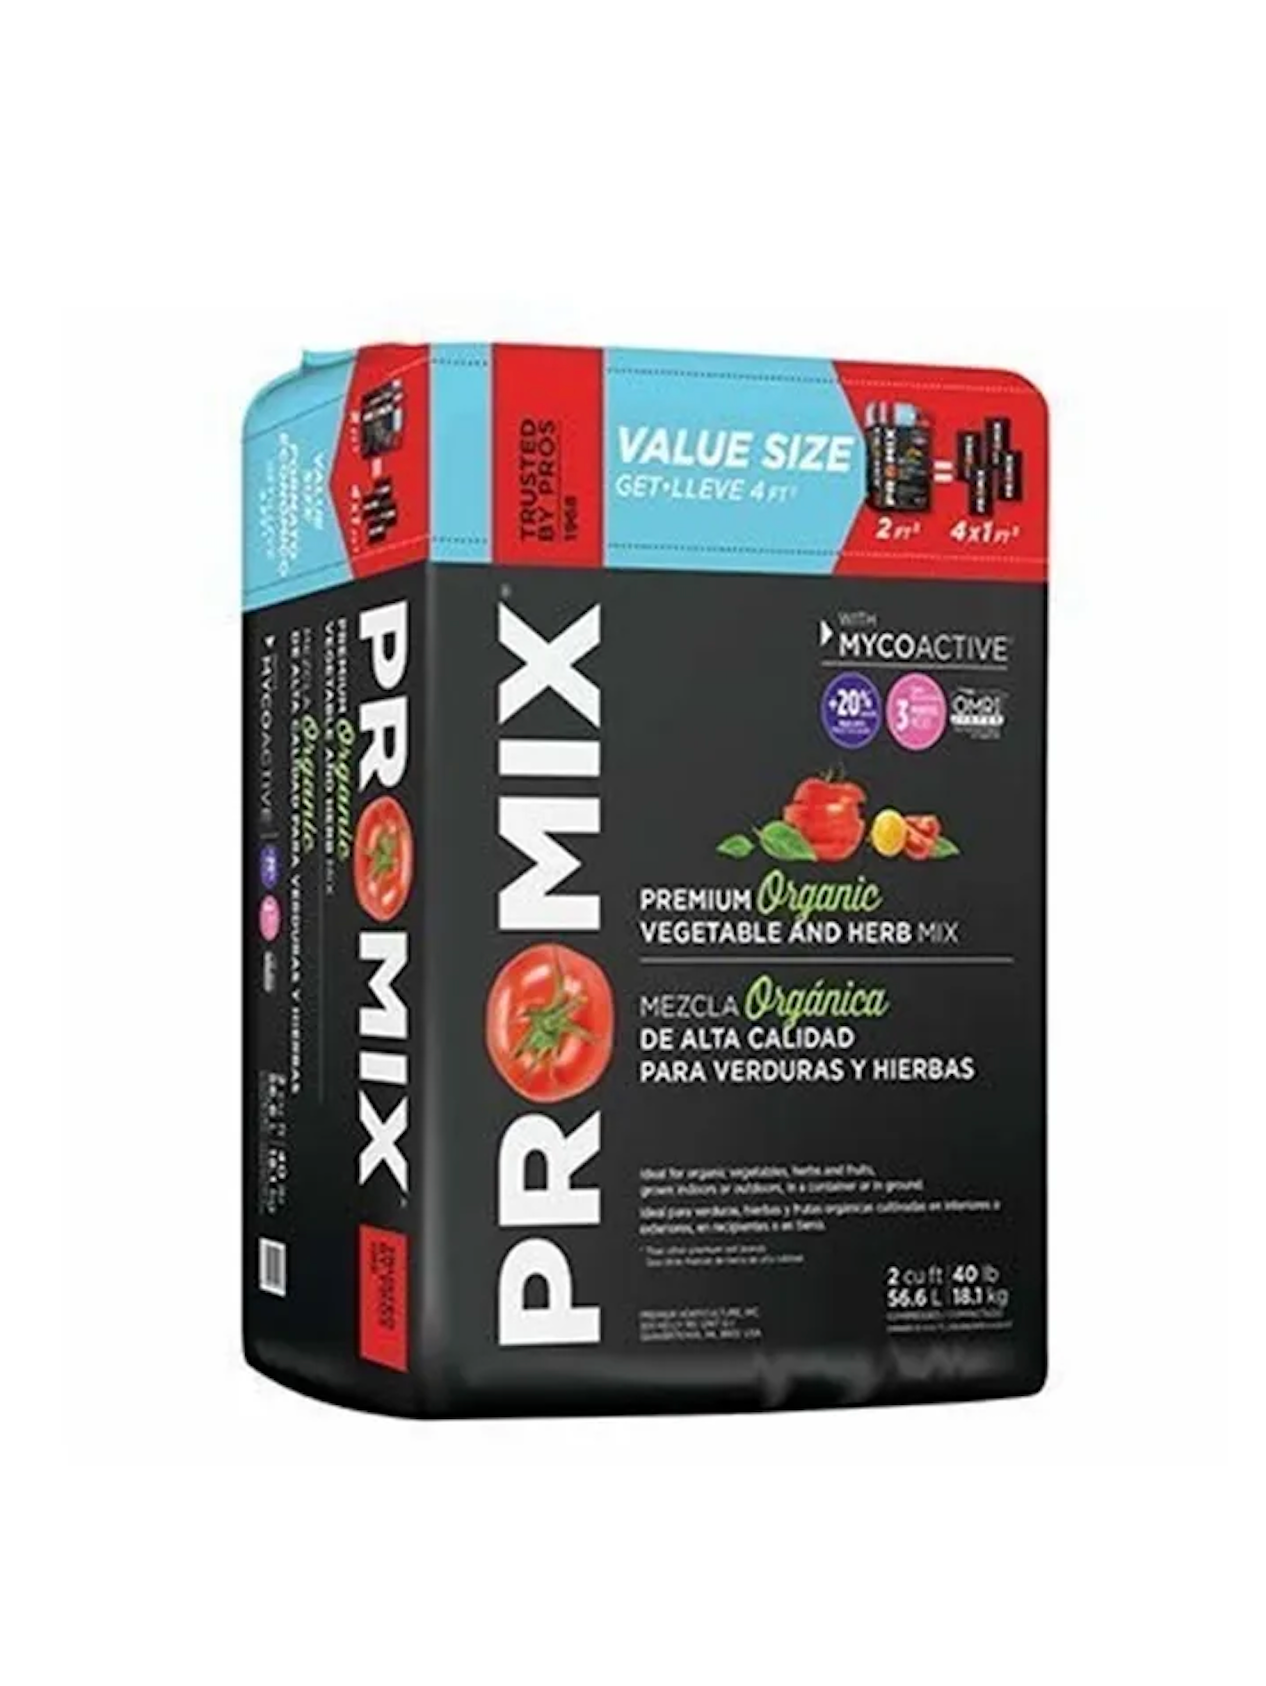 Pro-Mix Premium Organic Vegetable & Herb Mix